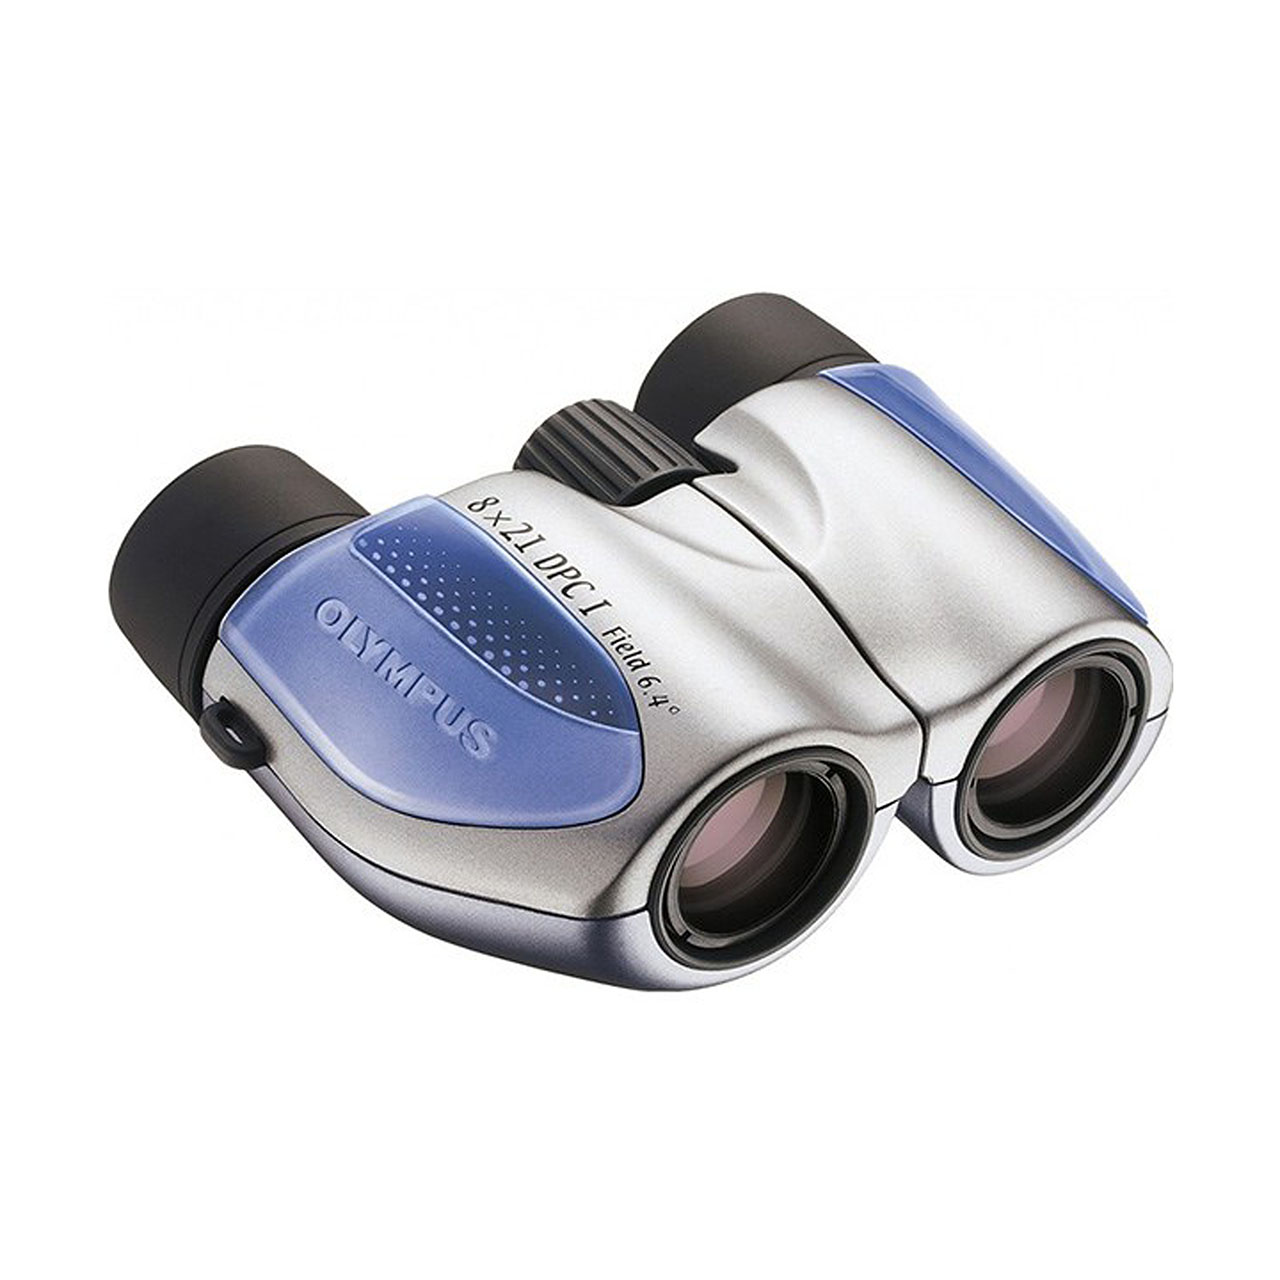 دوربین دو چشمی الیمپوس مدل DPCI 8x21